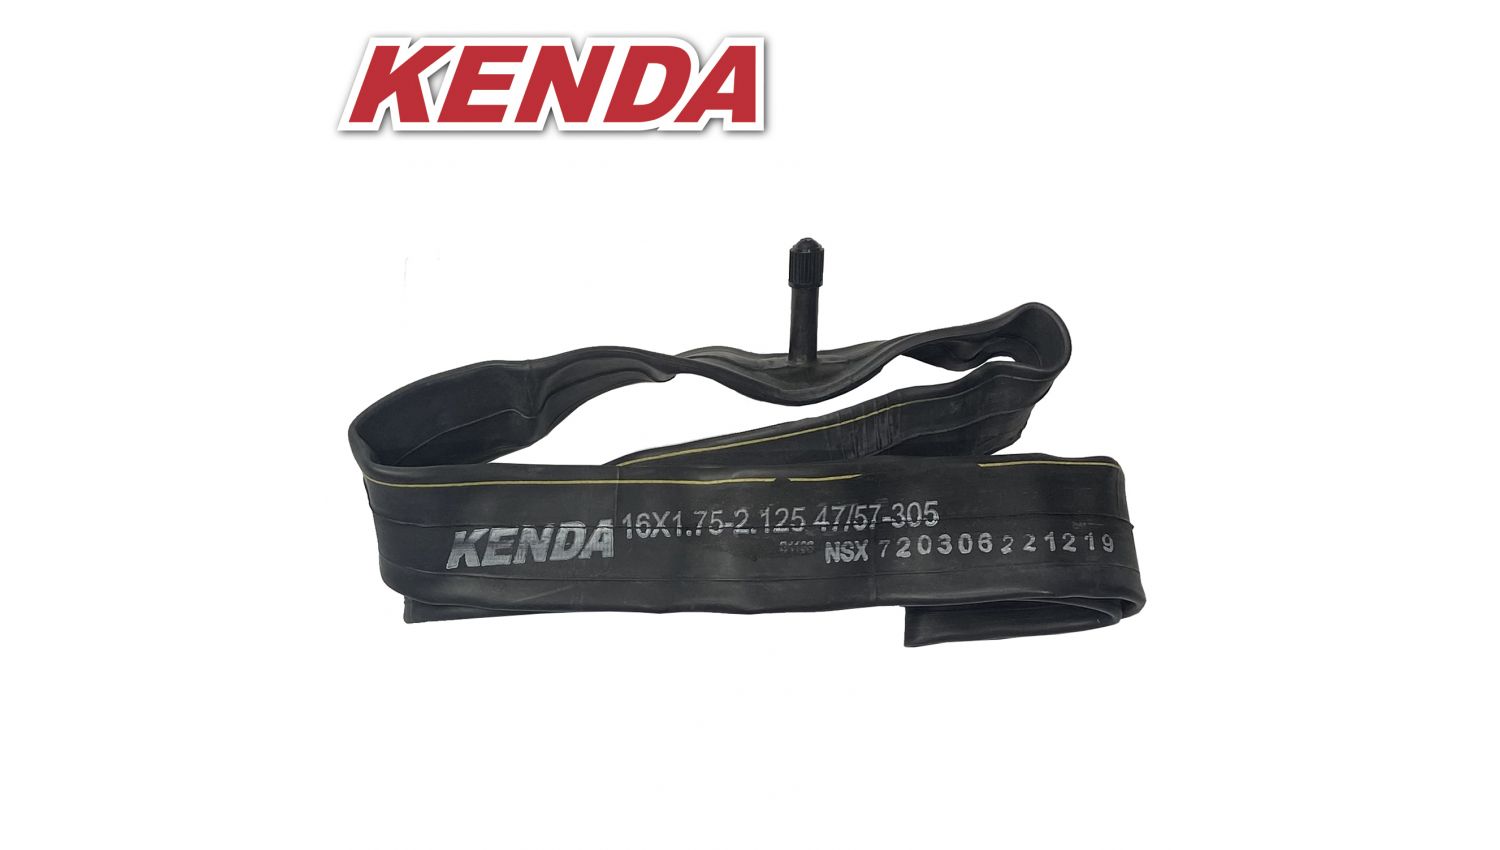 Фотографія Камера KENDA 16х1.75-2,125, A/V, 47/57-305, у коробці 3